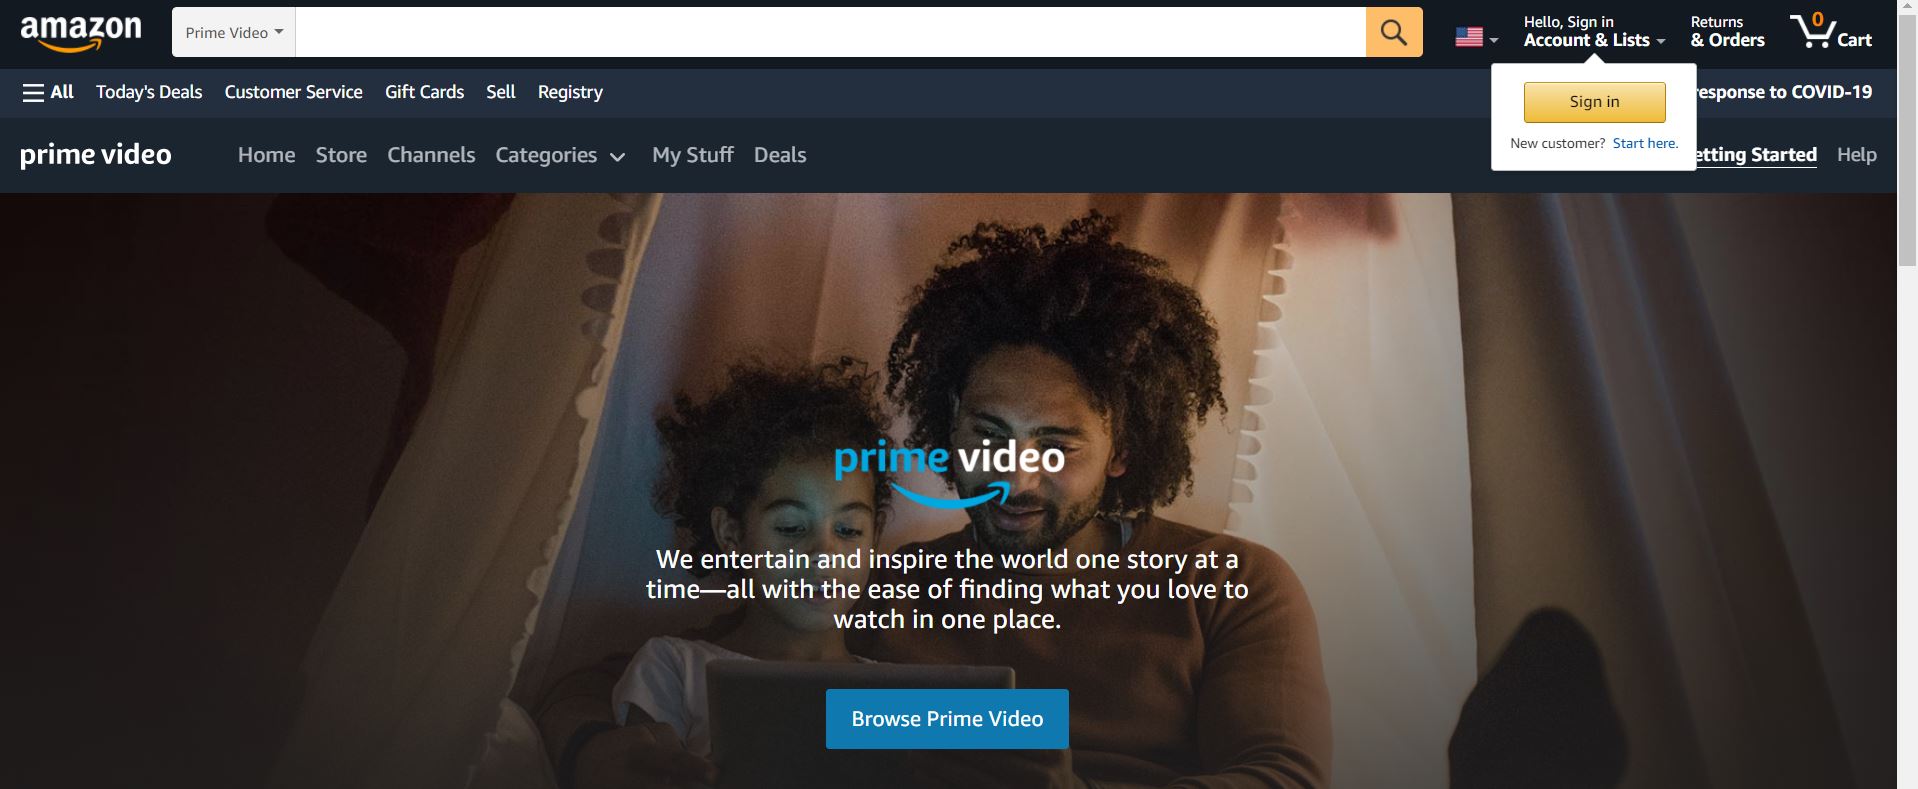 Cable TV Alternatives Amazon Prime Video 